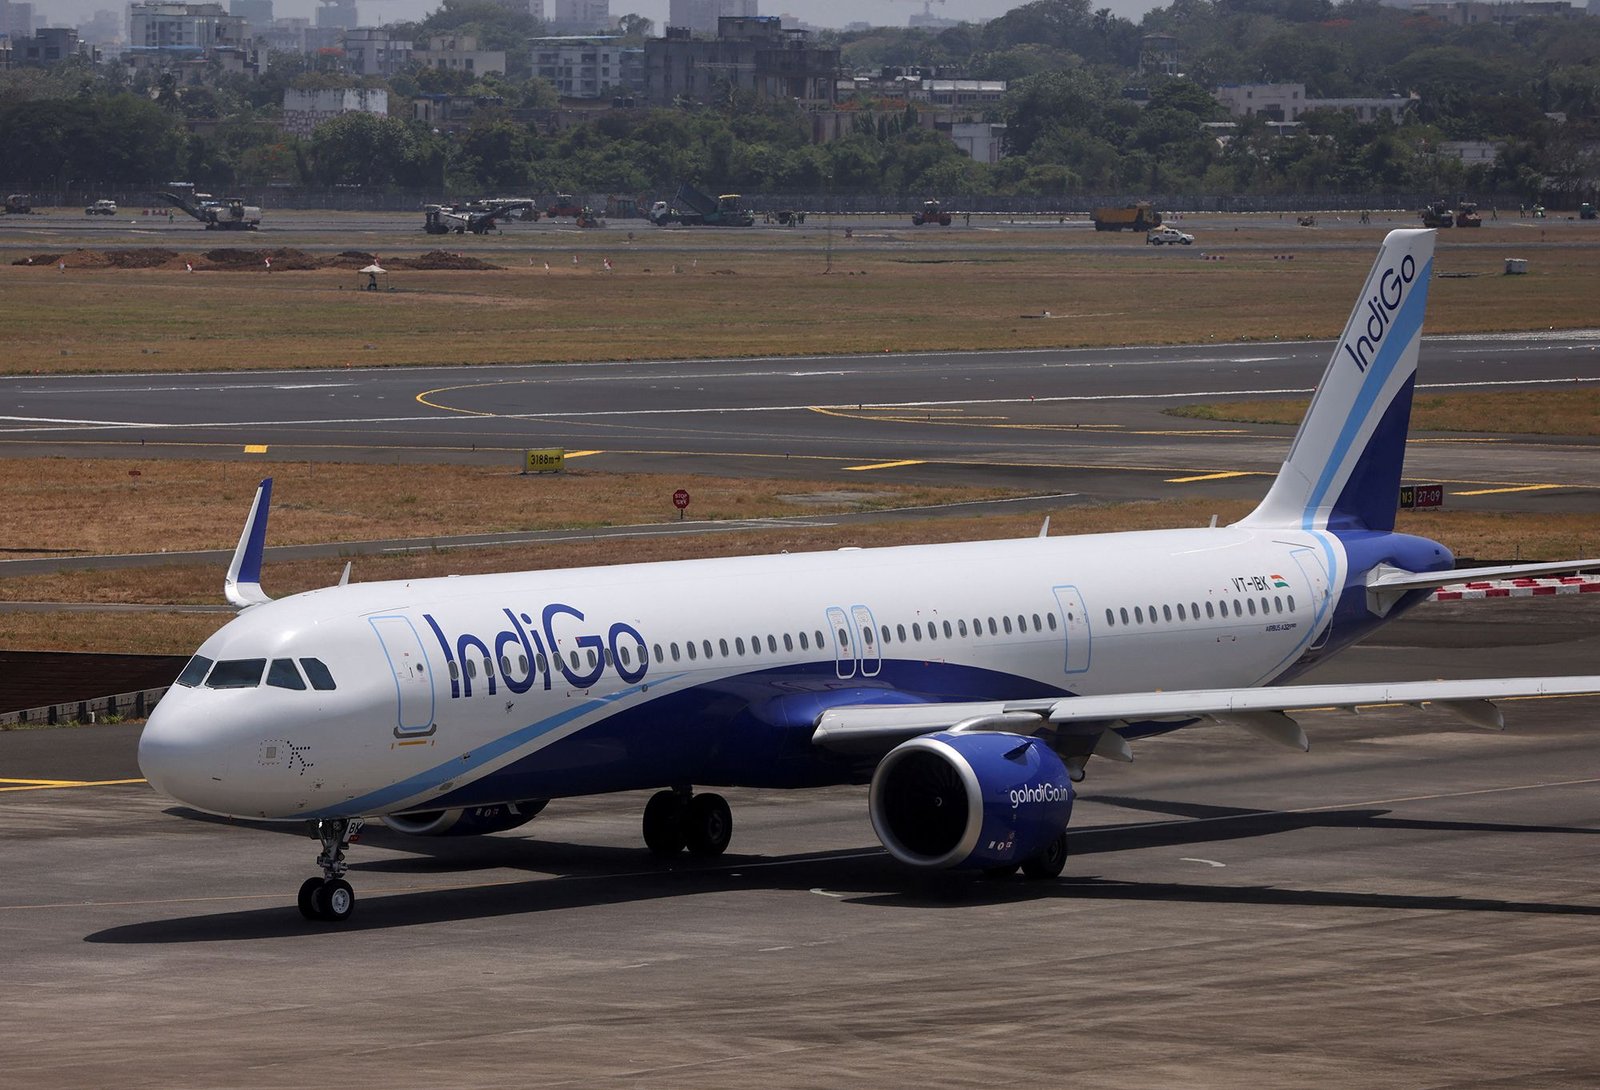 Indian Airlines makes emergency landing in Karachi after rider dies